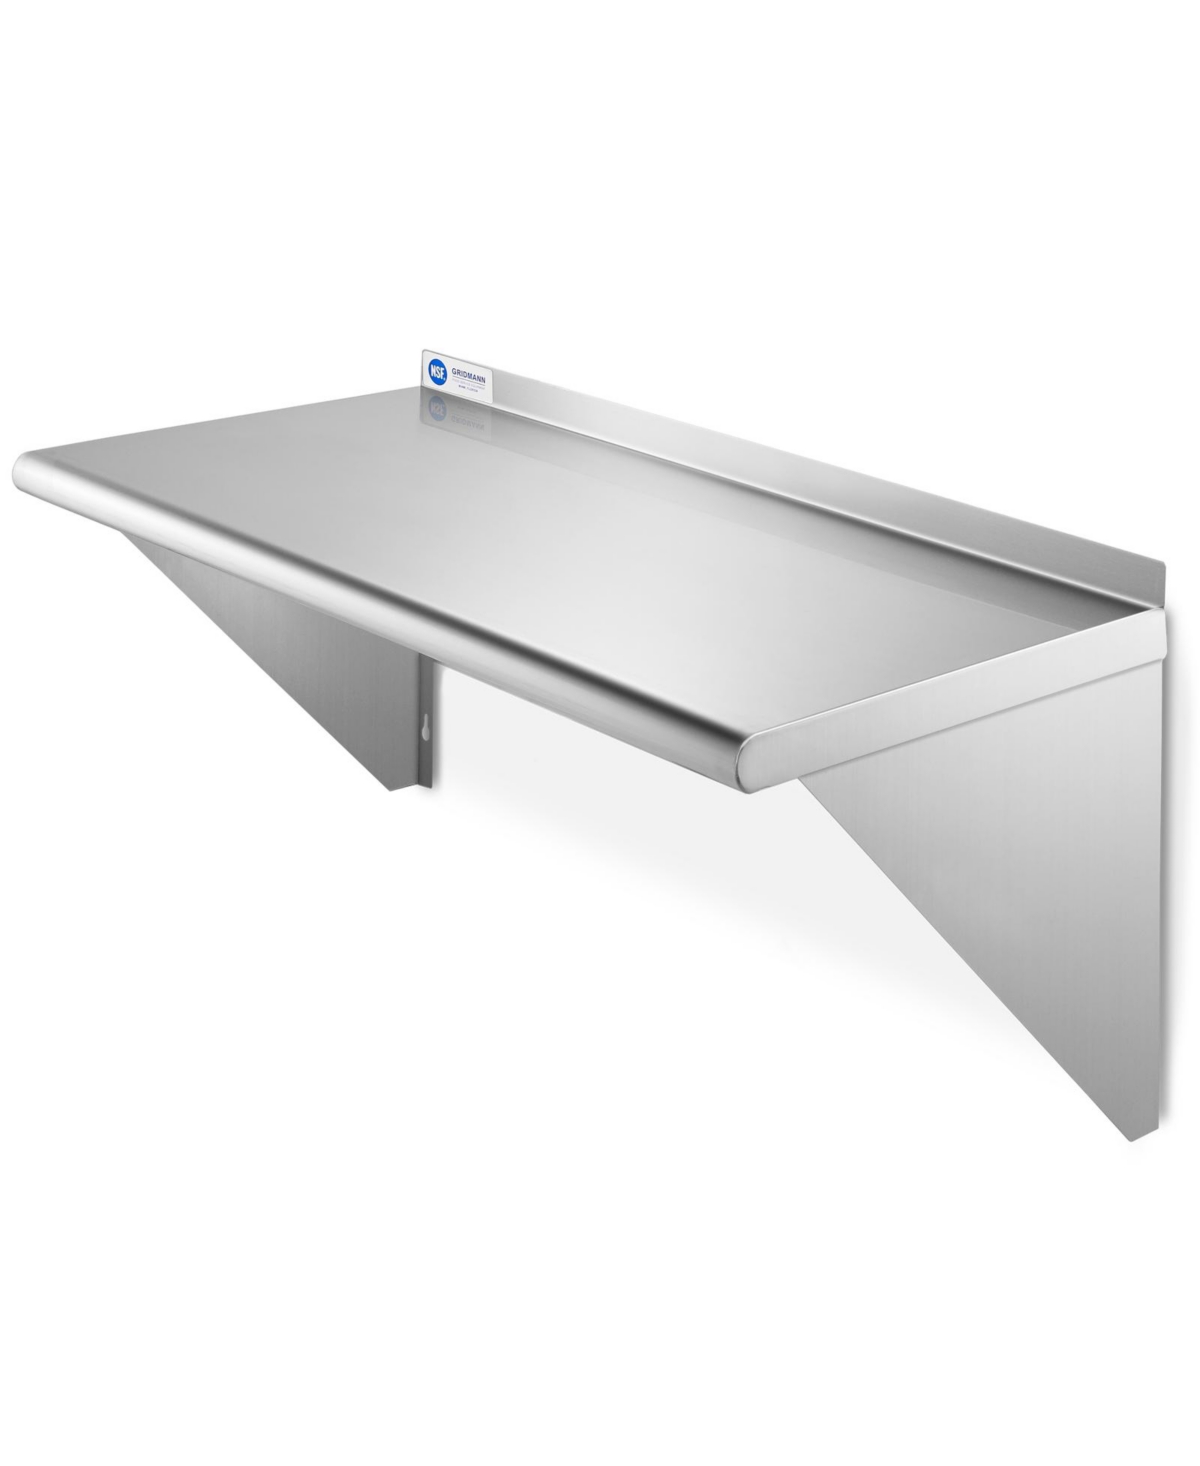 16 Gauge 12" x 24" Nsf Stainless Steel Kitchen Wall Mount Shelf w/ Backsplash - Silver